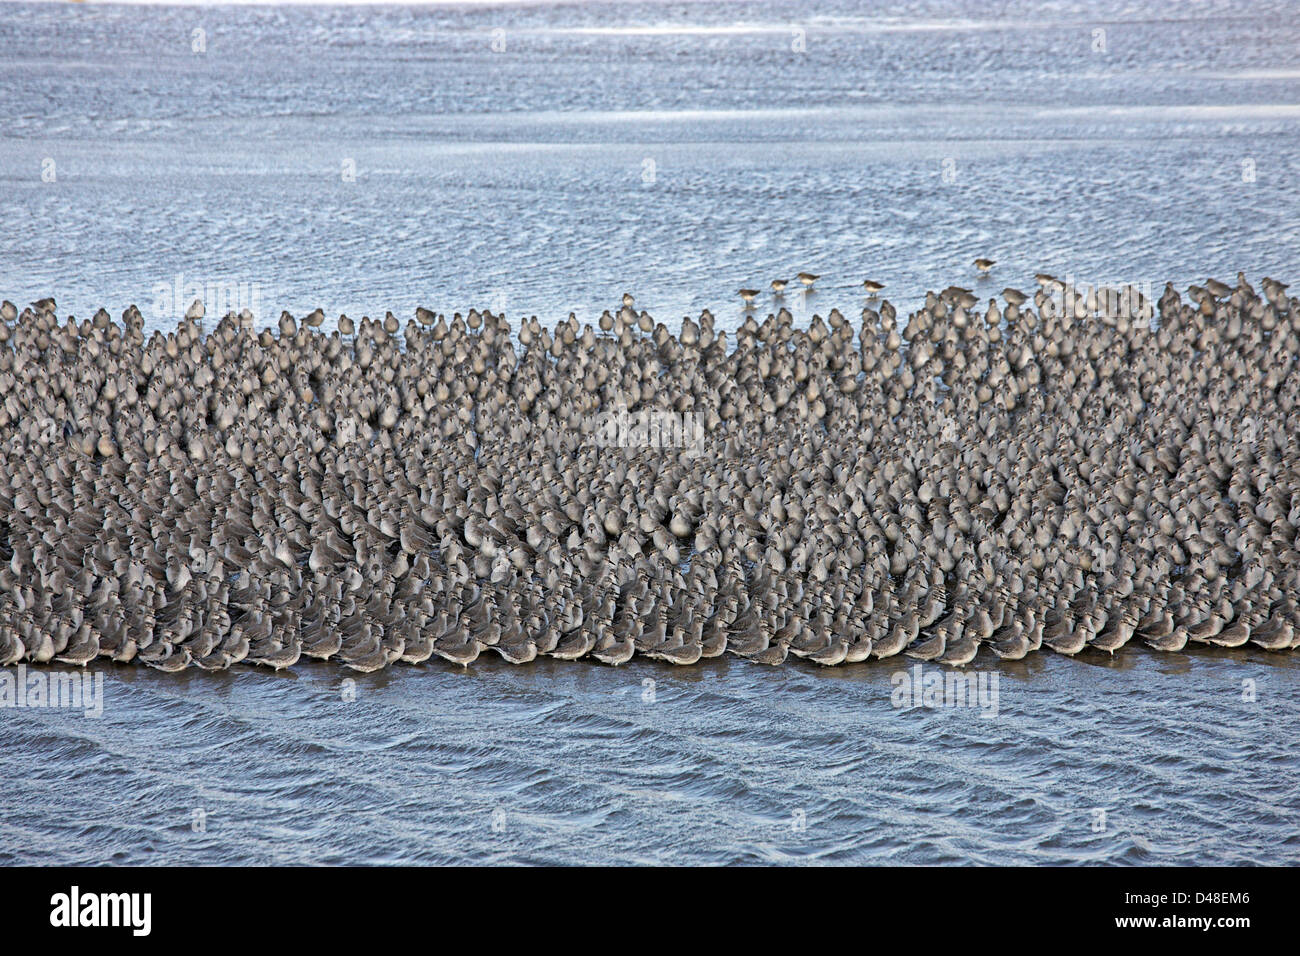 Knot (Calidris canutus) flock walking on shorebefore rising tide Liverpool Bay UK December 2198 Stock Photo